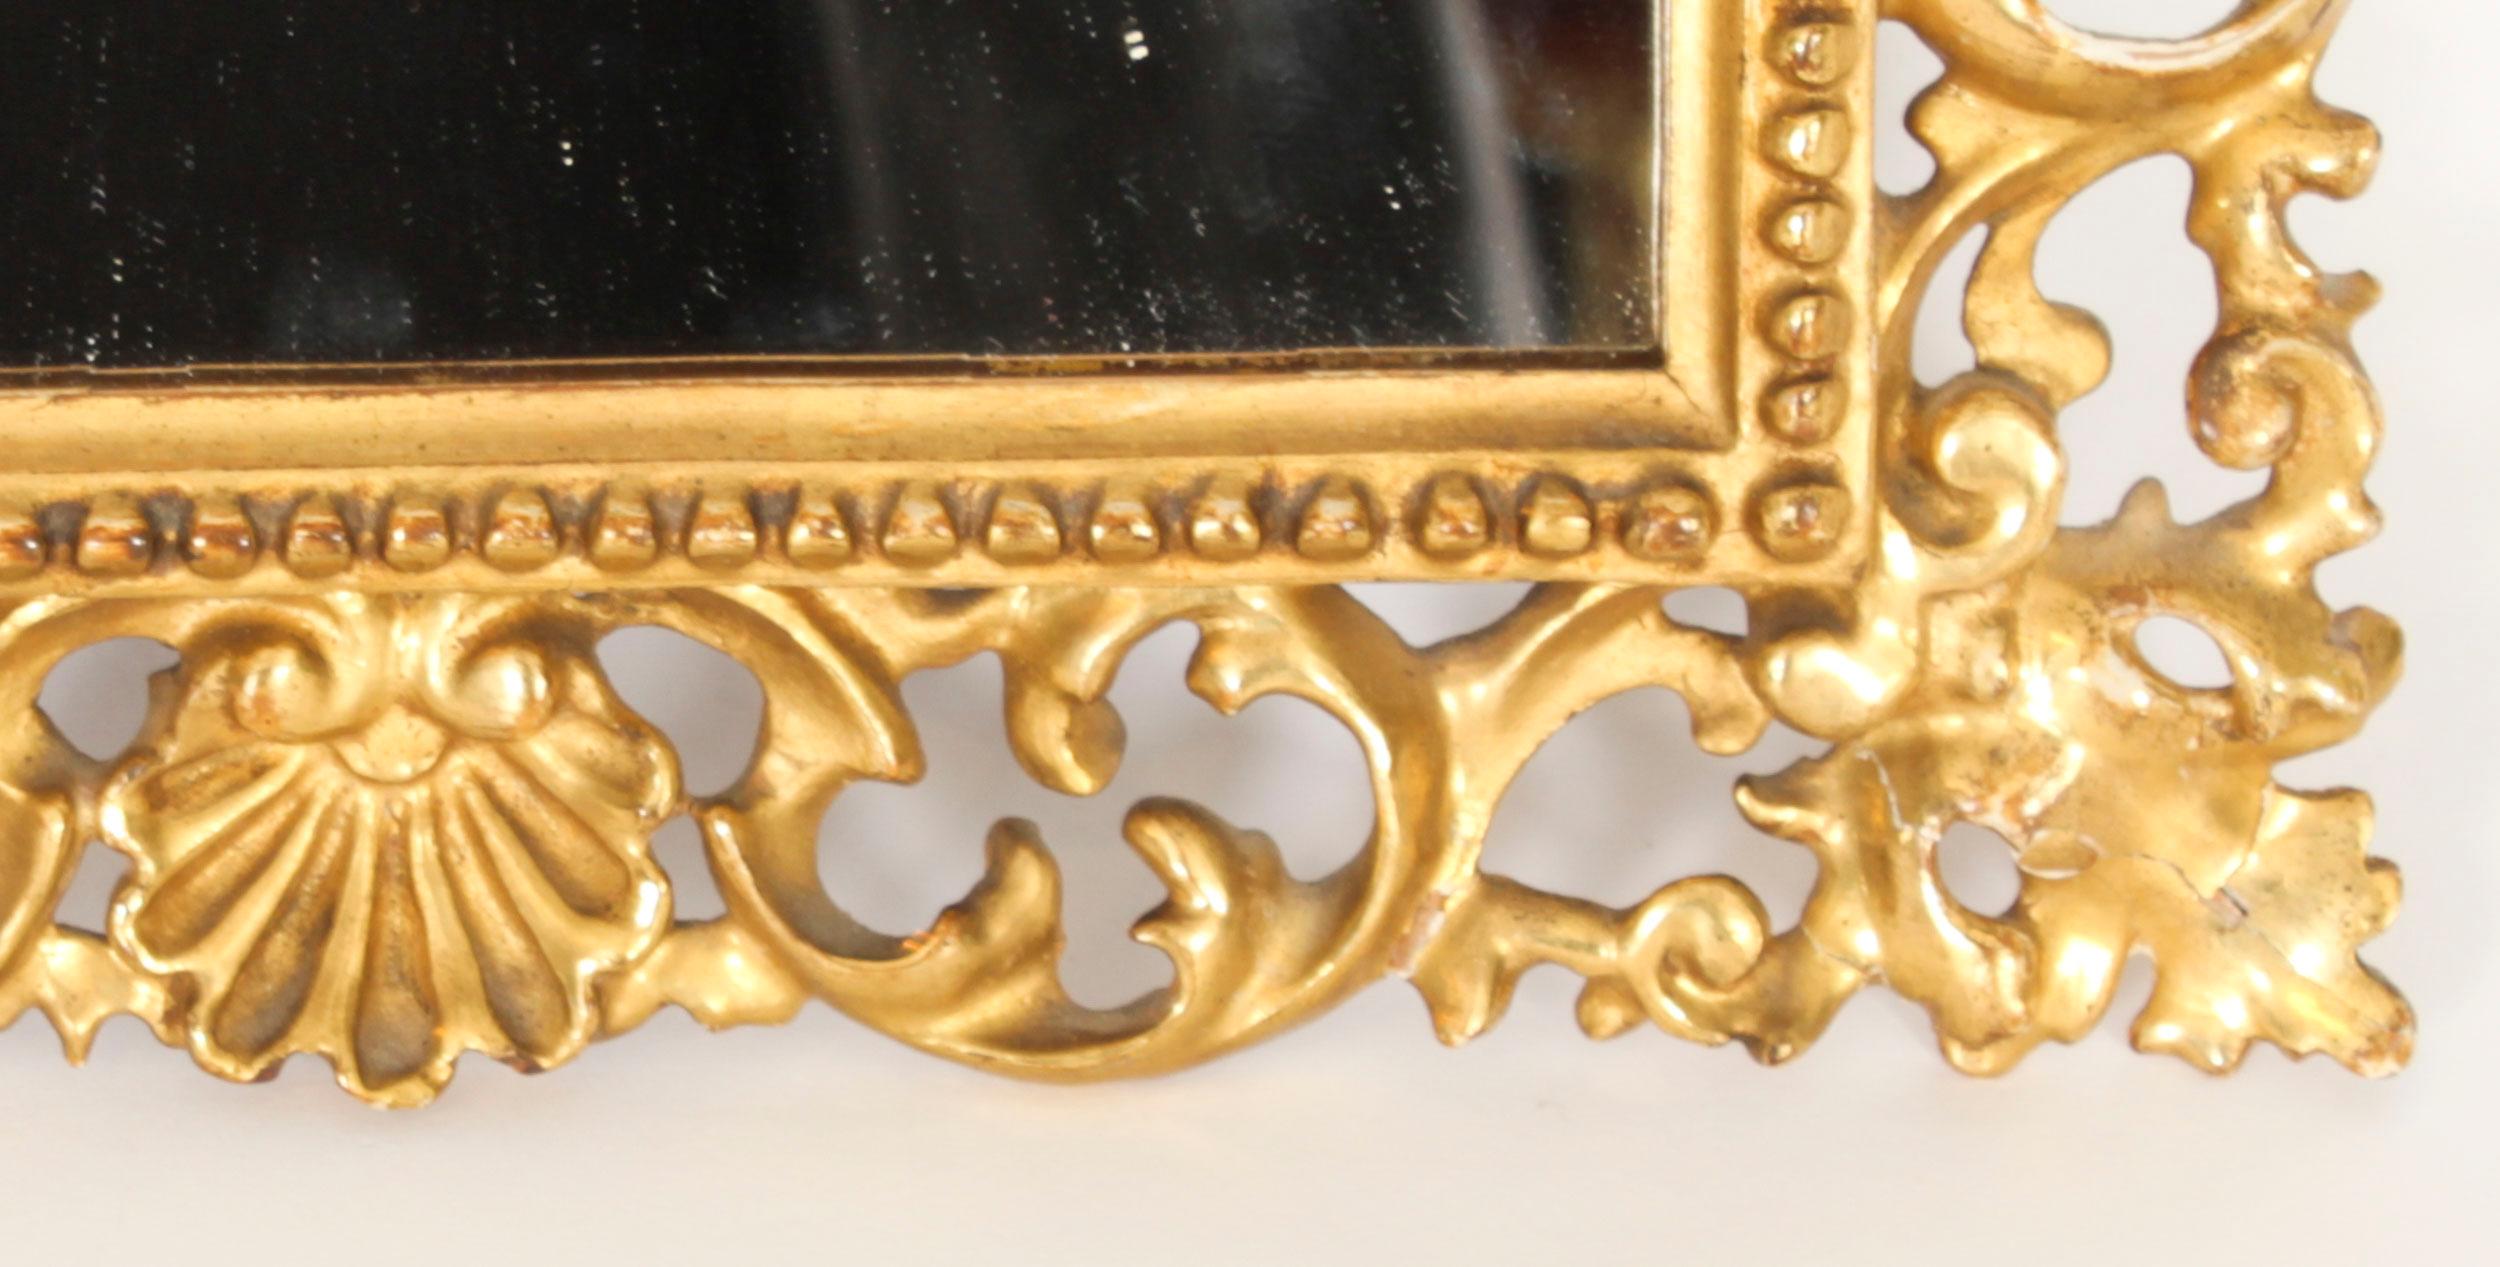 Antique Italian Giltwood Florentine Mirror 19th Century 40 x 30cm For Sale 1